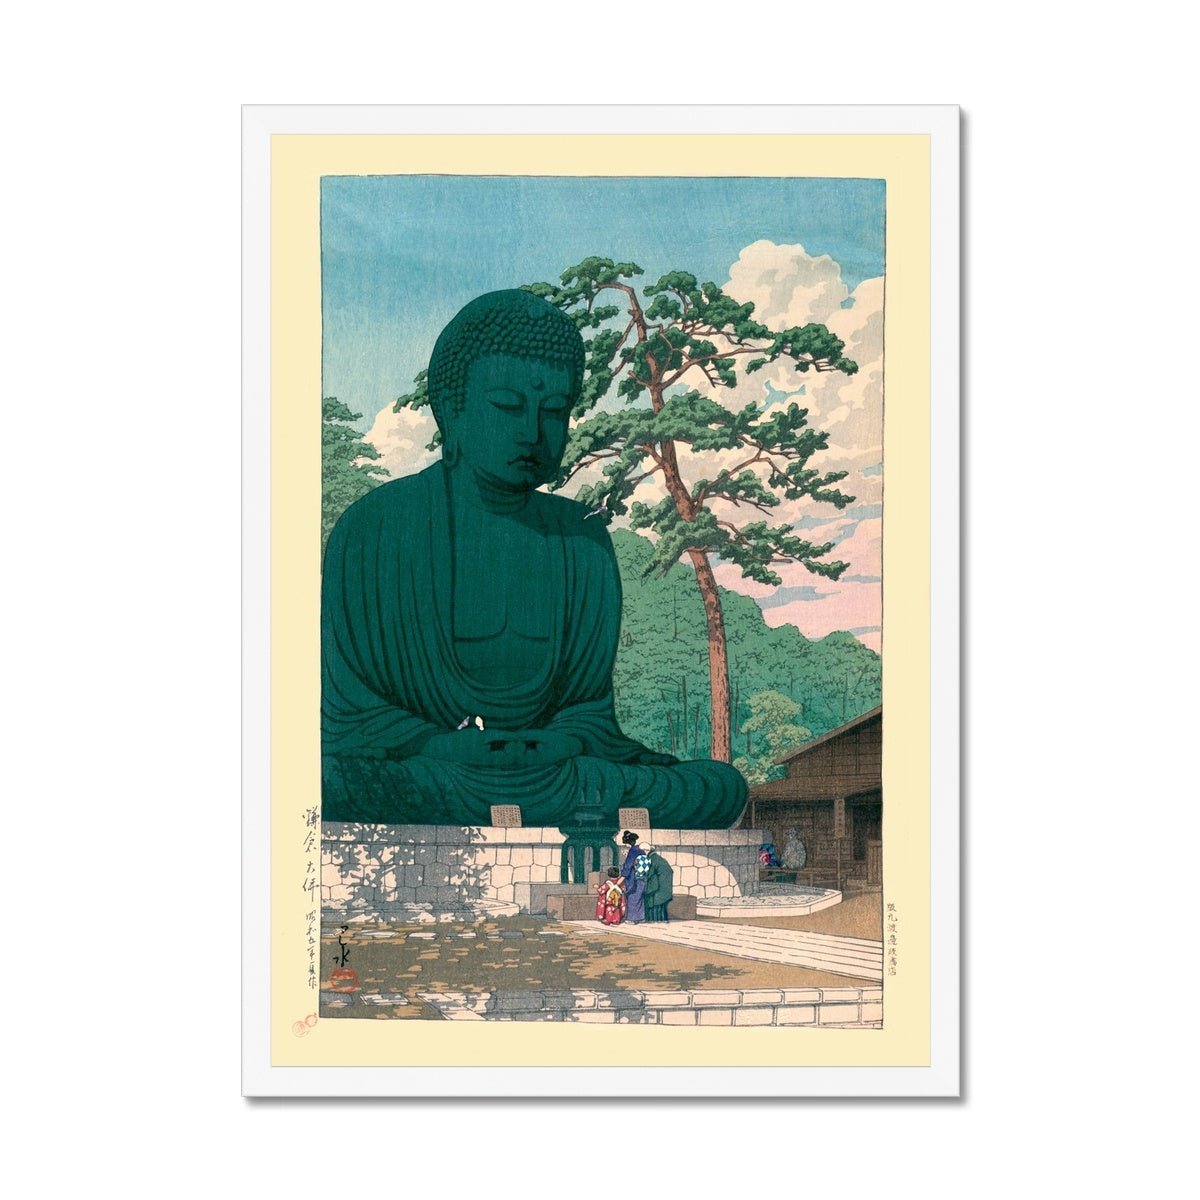 Framed Print 8"x12" / White Frame The Great Buddha of Kamakura (Kawase Hasui) Japanese Edo Woodblock Ukiyo-E Framed Art Print